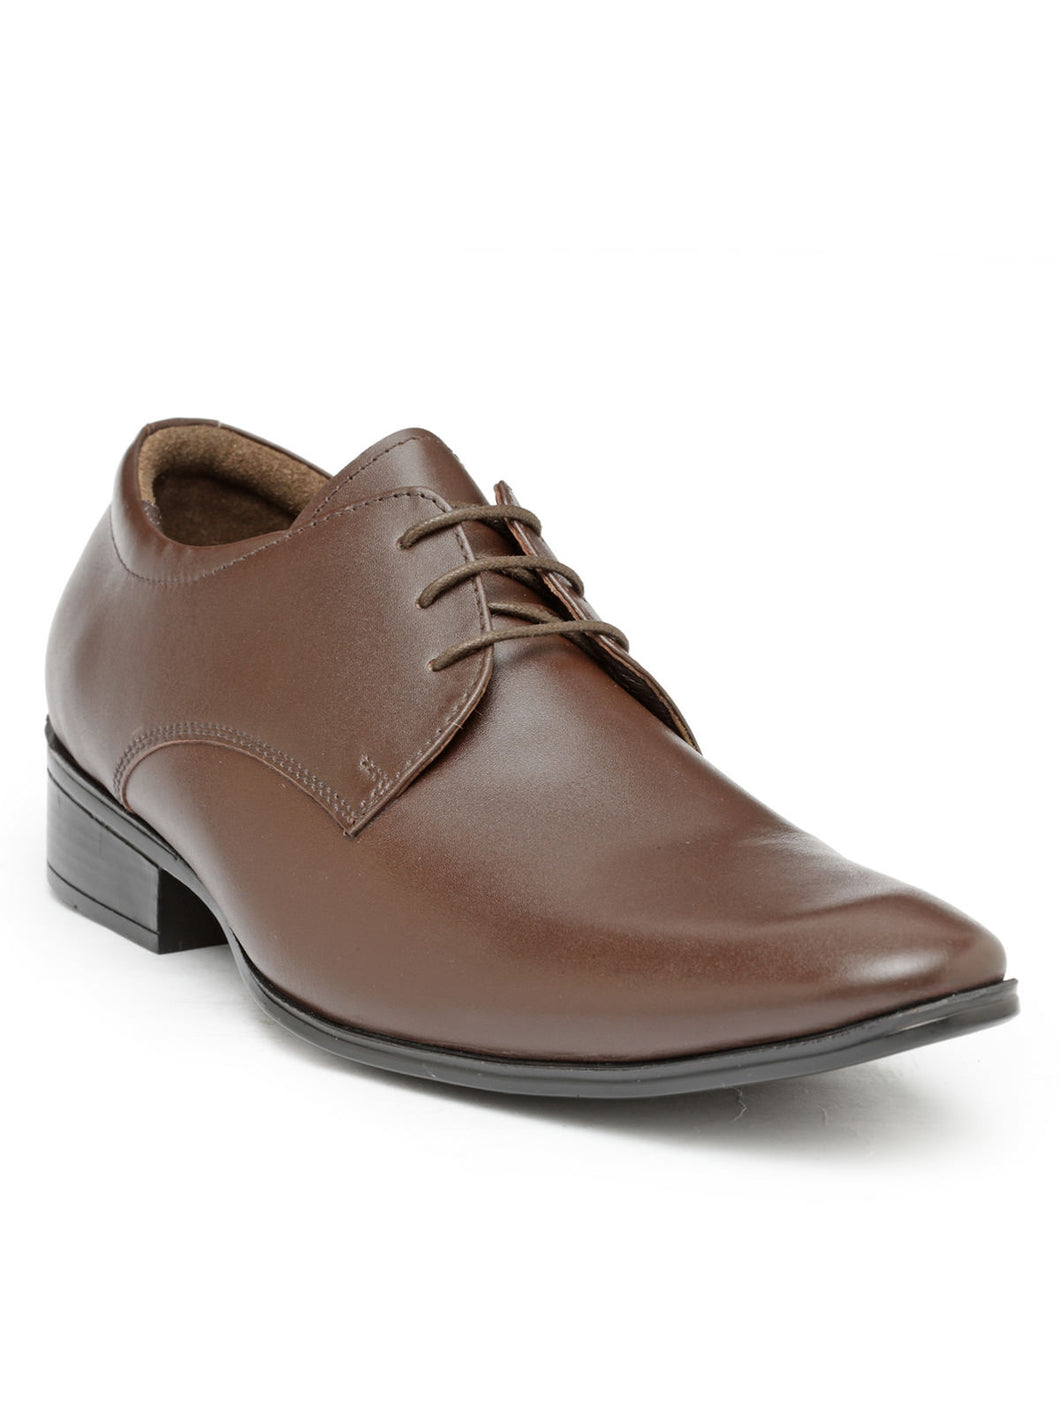 Teakwood Leather Brown Formal Shoes